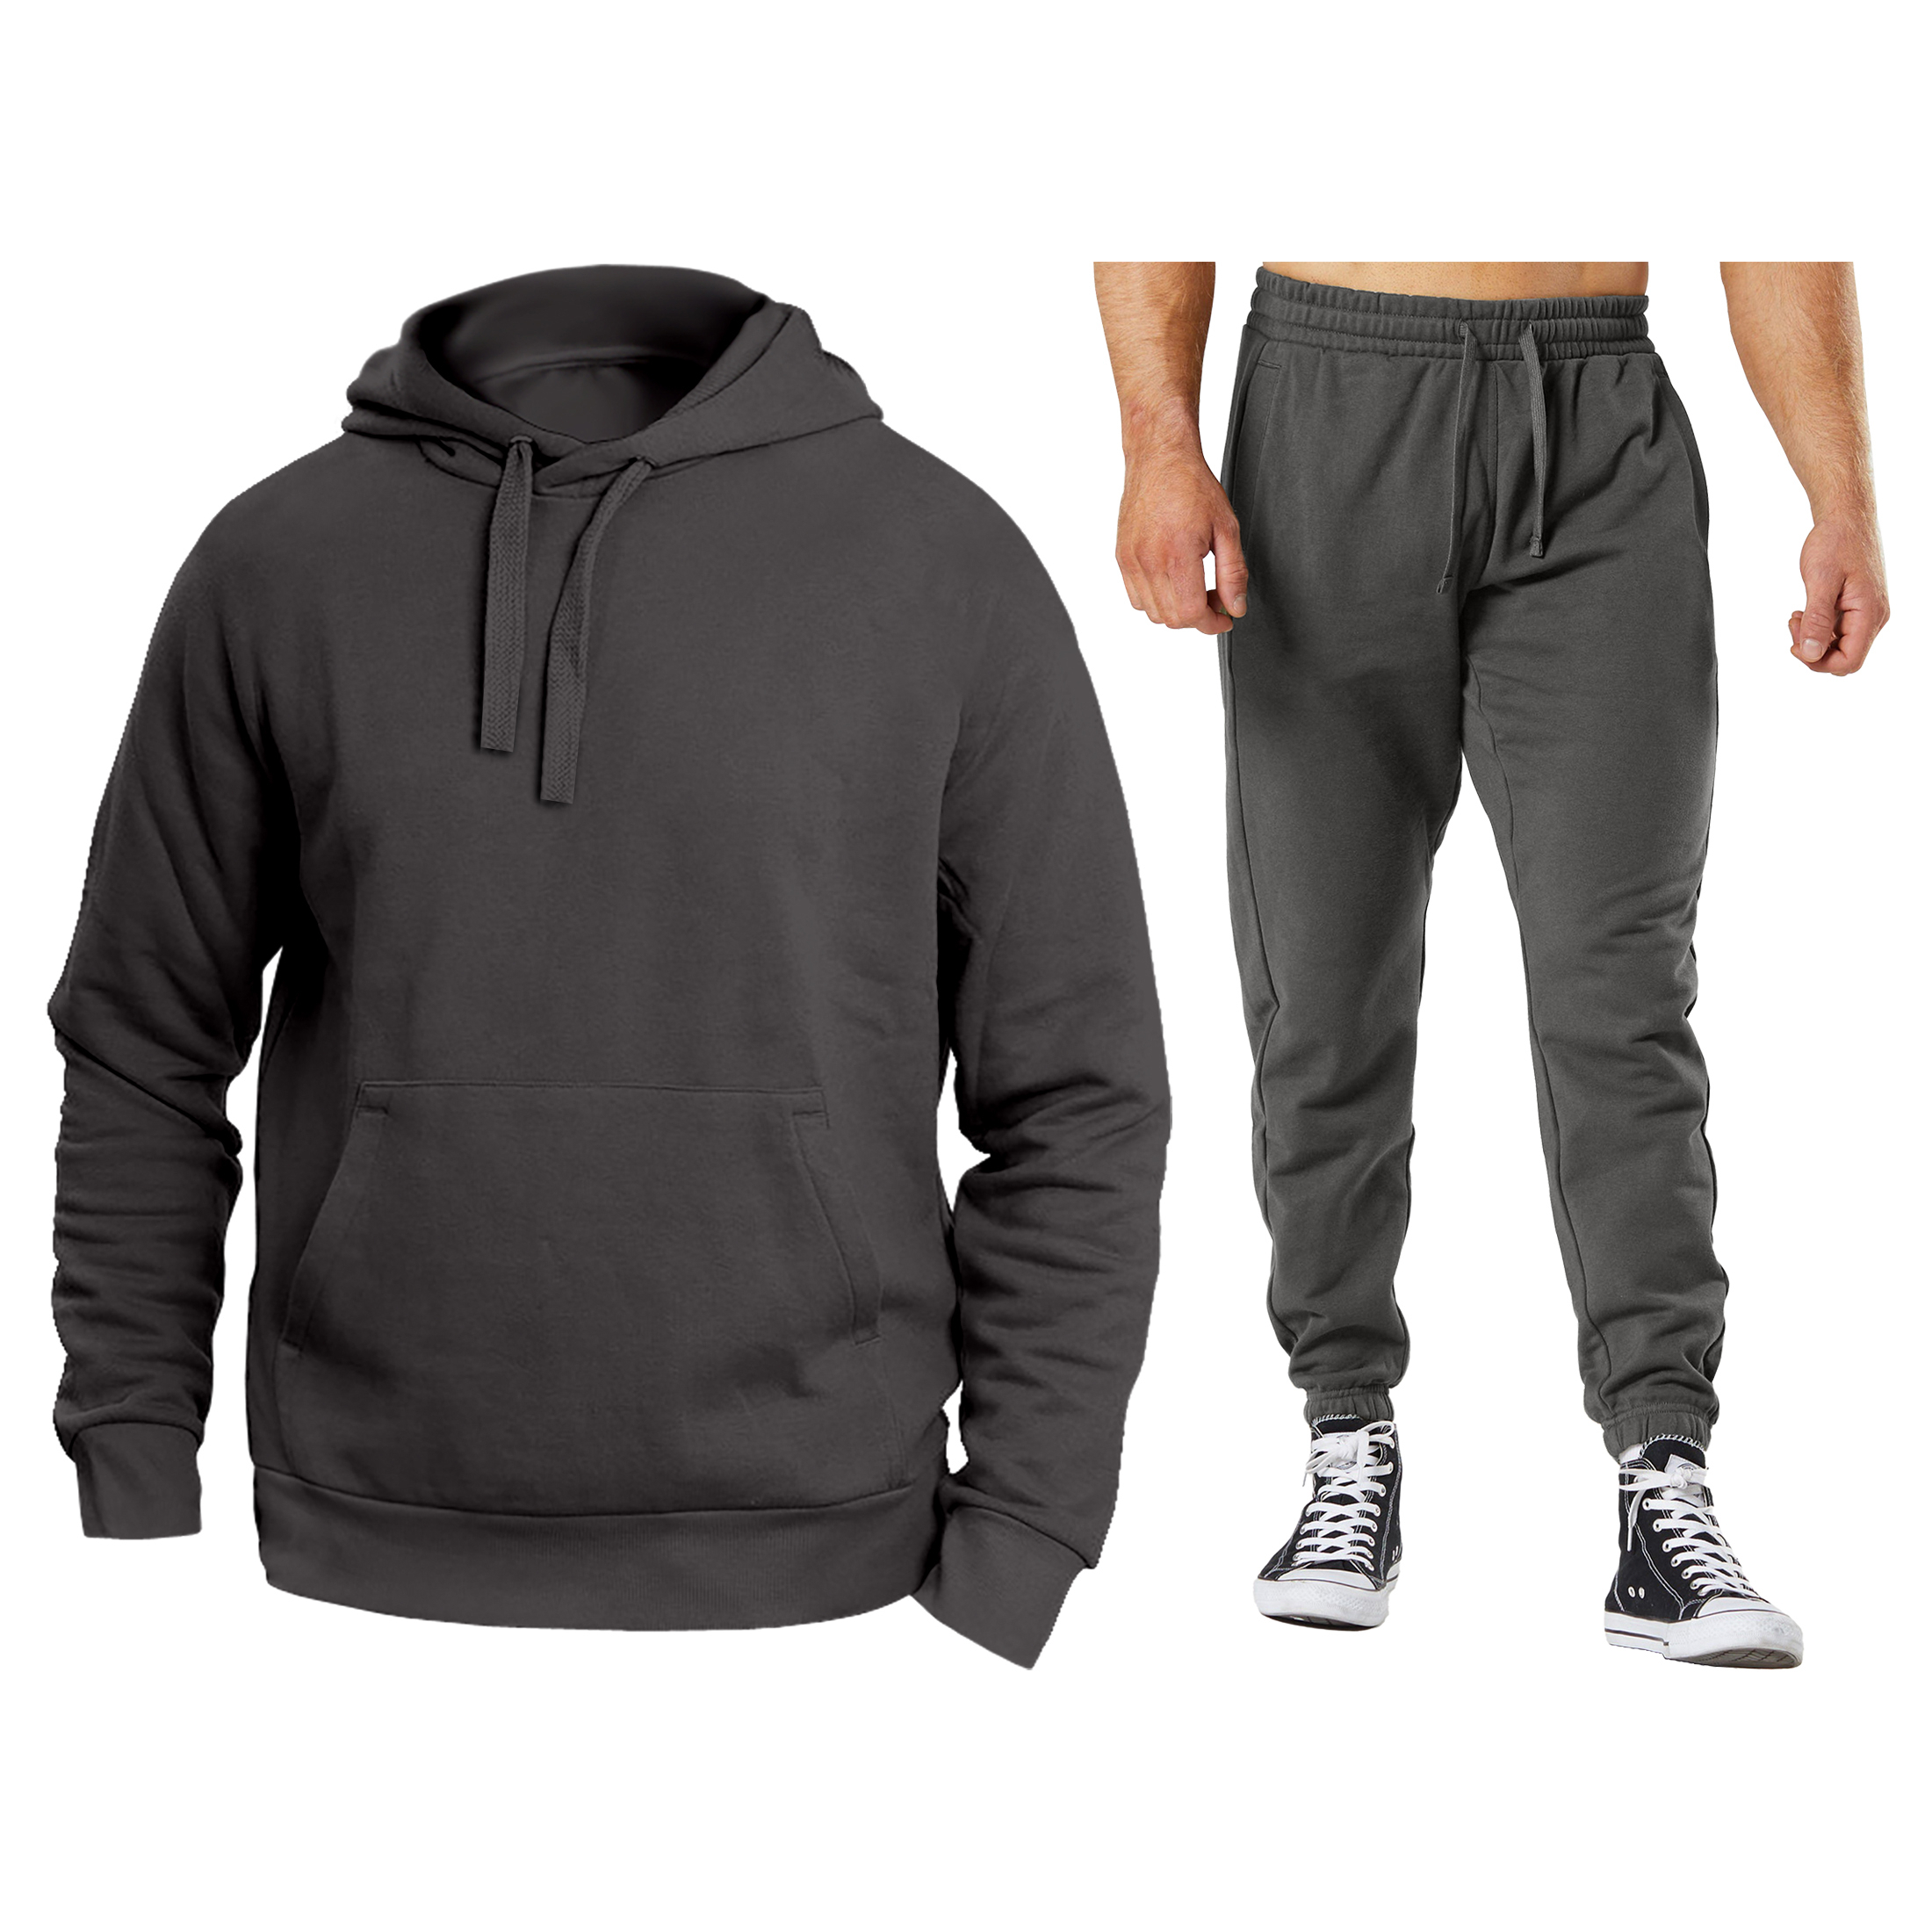 Men's Athletic Warm Jogging Pullover Active Sweatsuit - Charcoal, Large